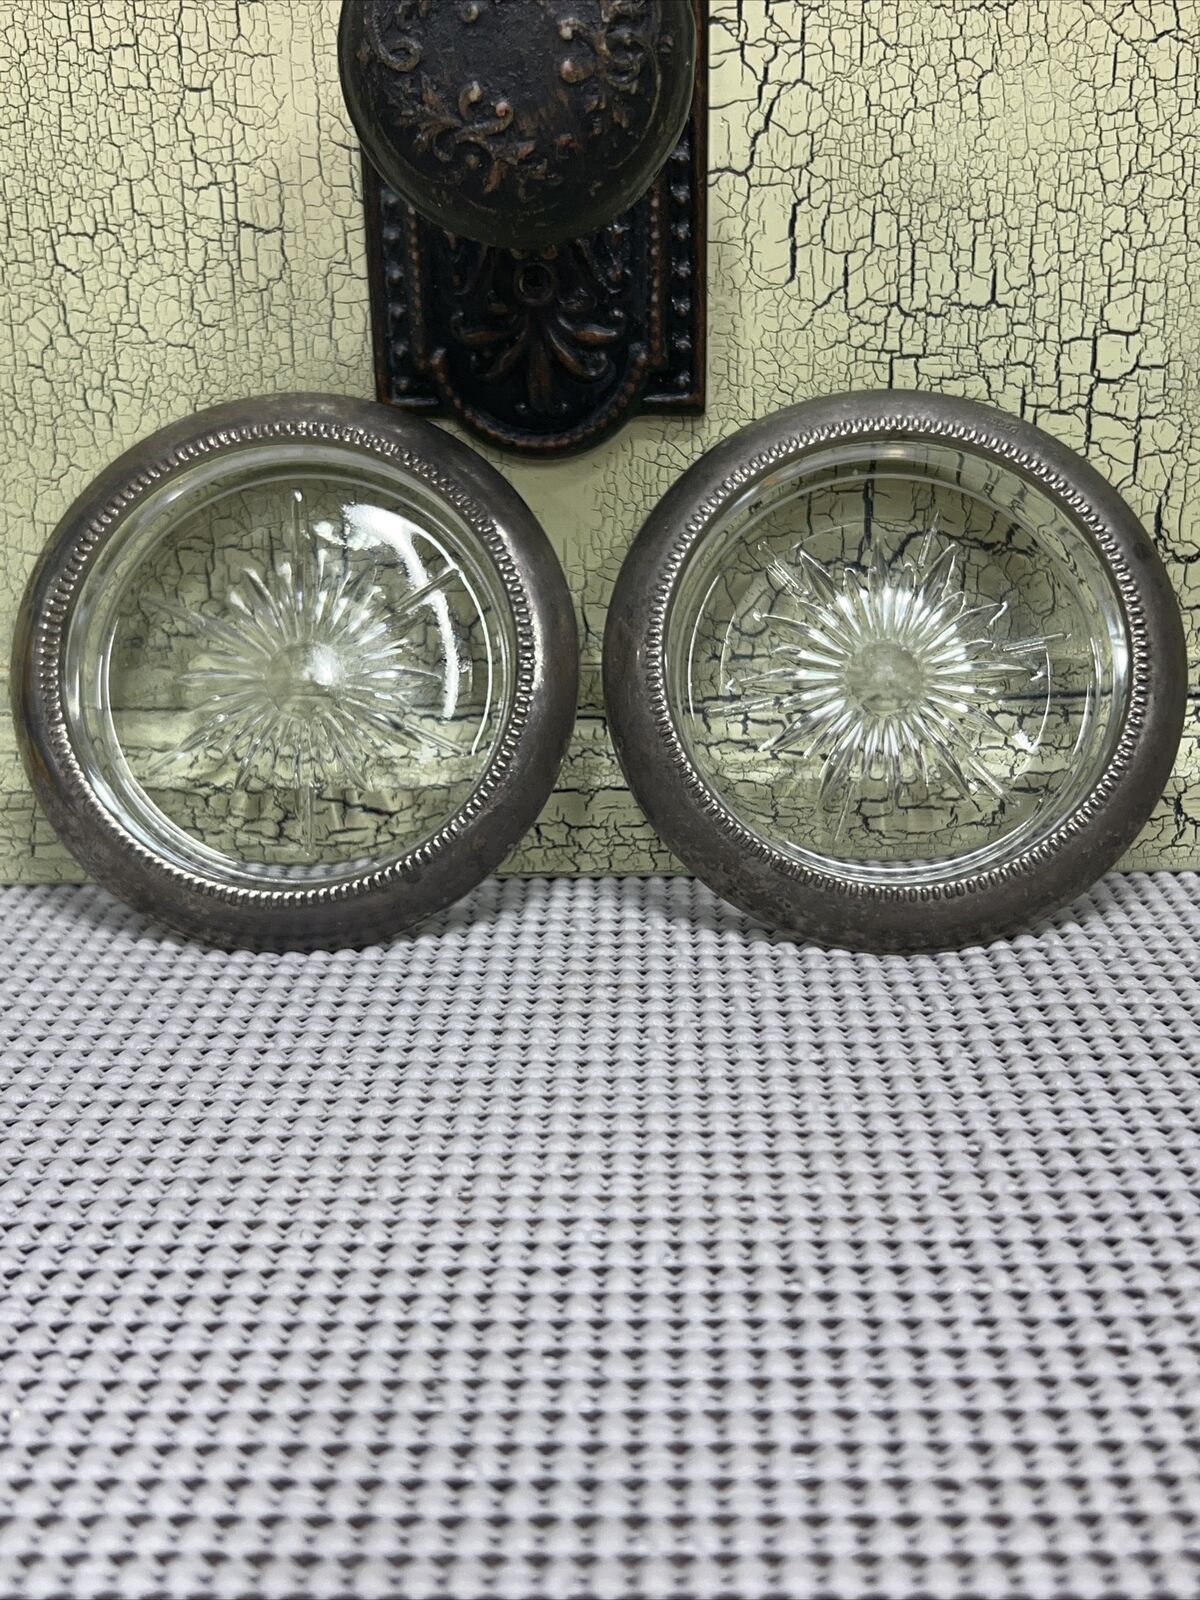 Vintage W & S Blackinton silver plate glass coasters - set of 2 elegant